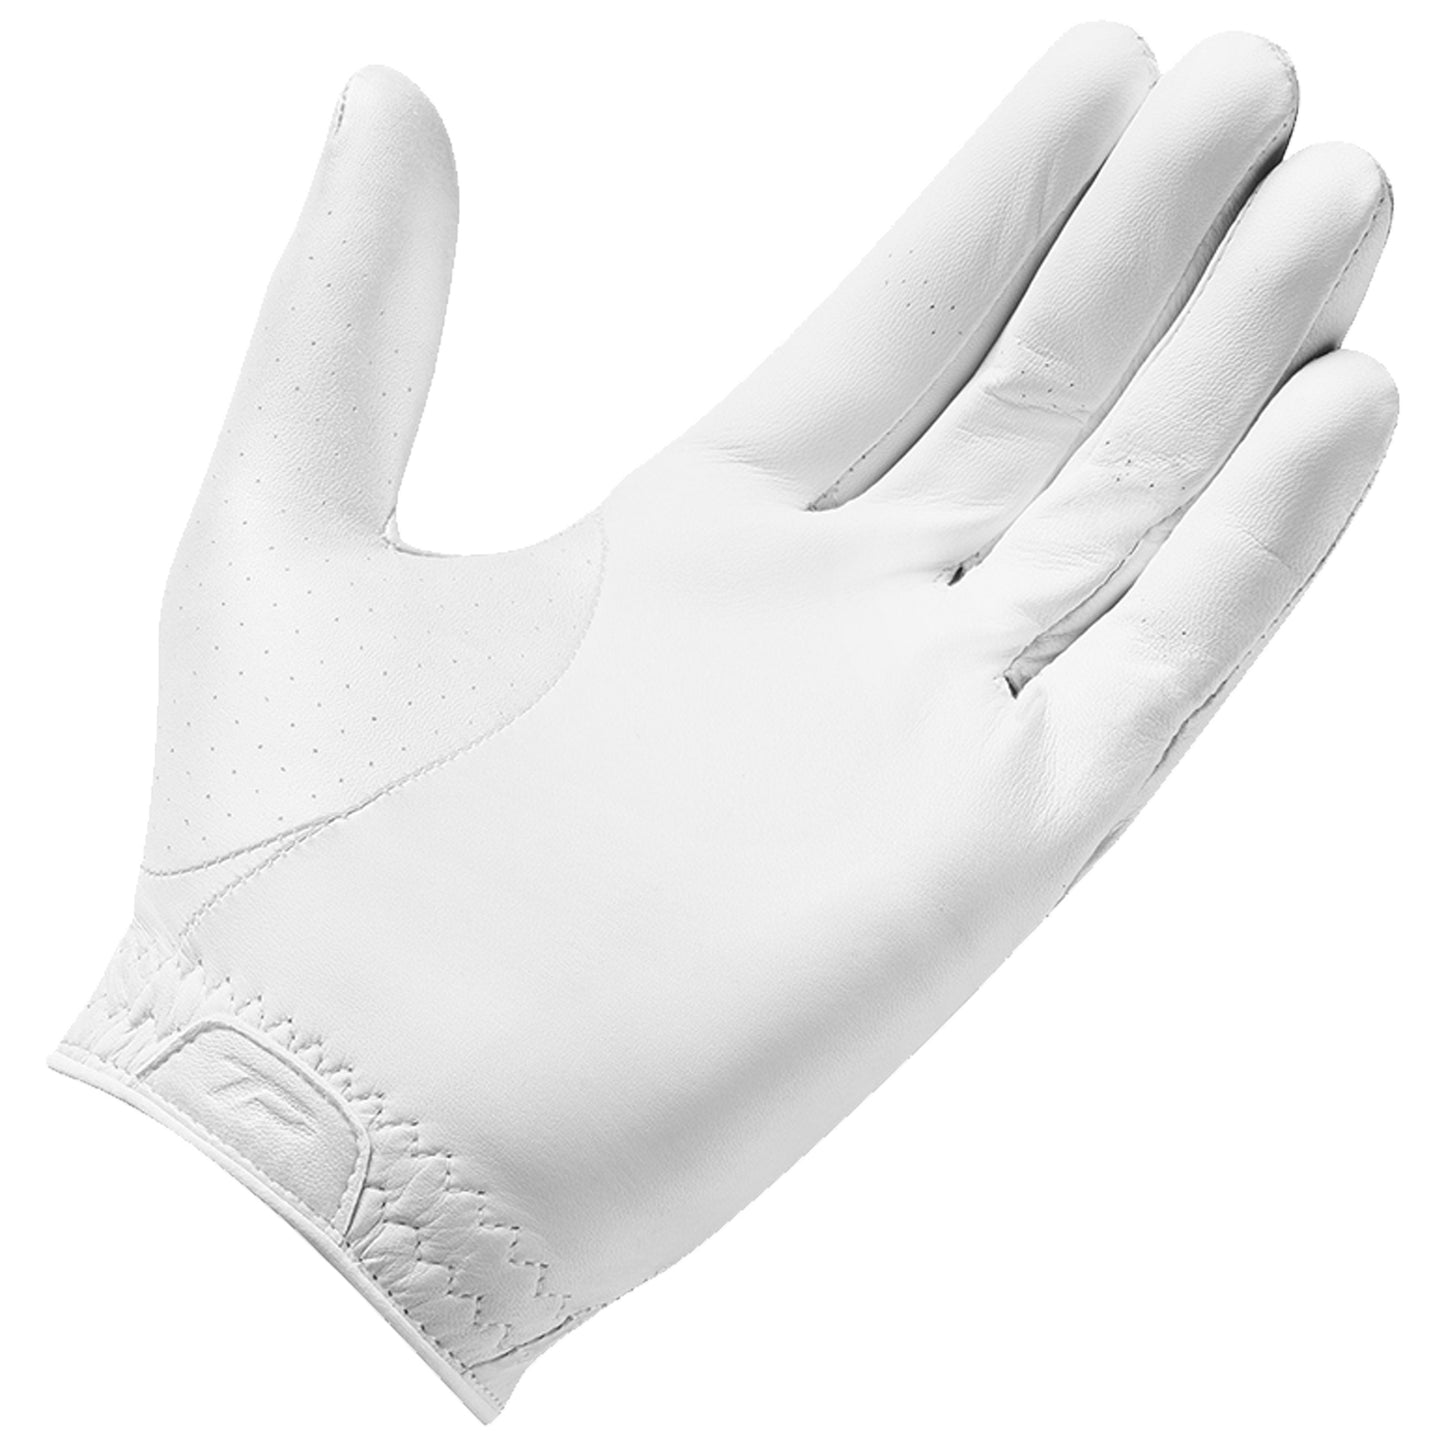 TaylorMade Ladies Left Hand Tour Preferred Golf Glove